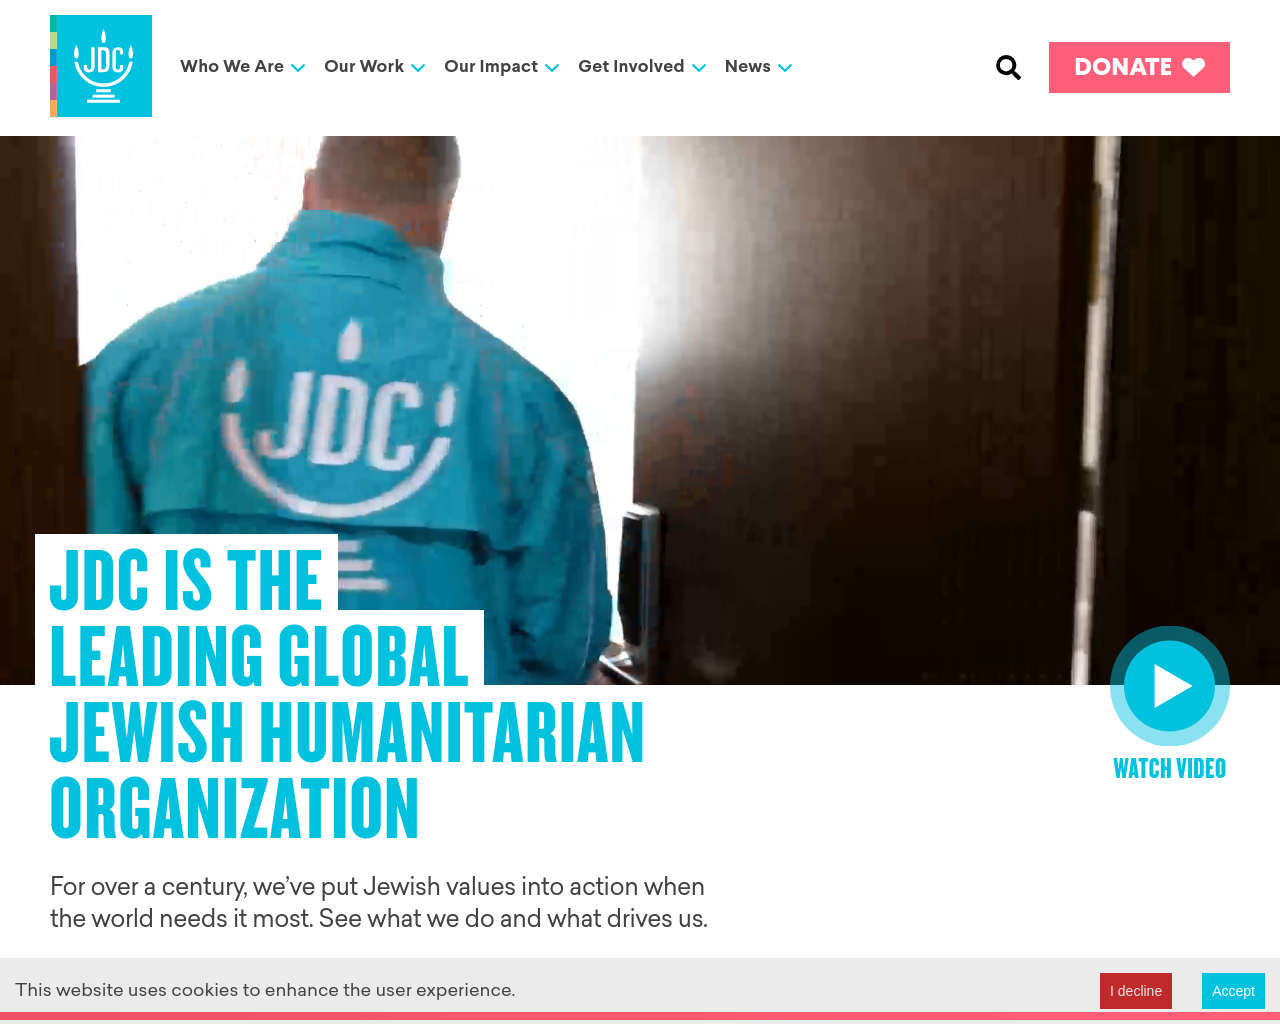 jdc.org